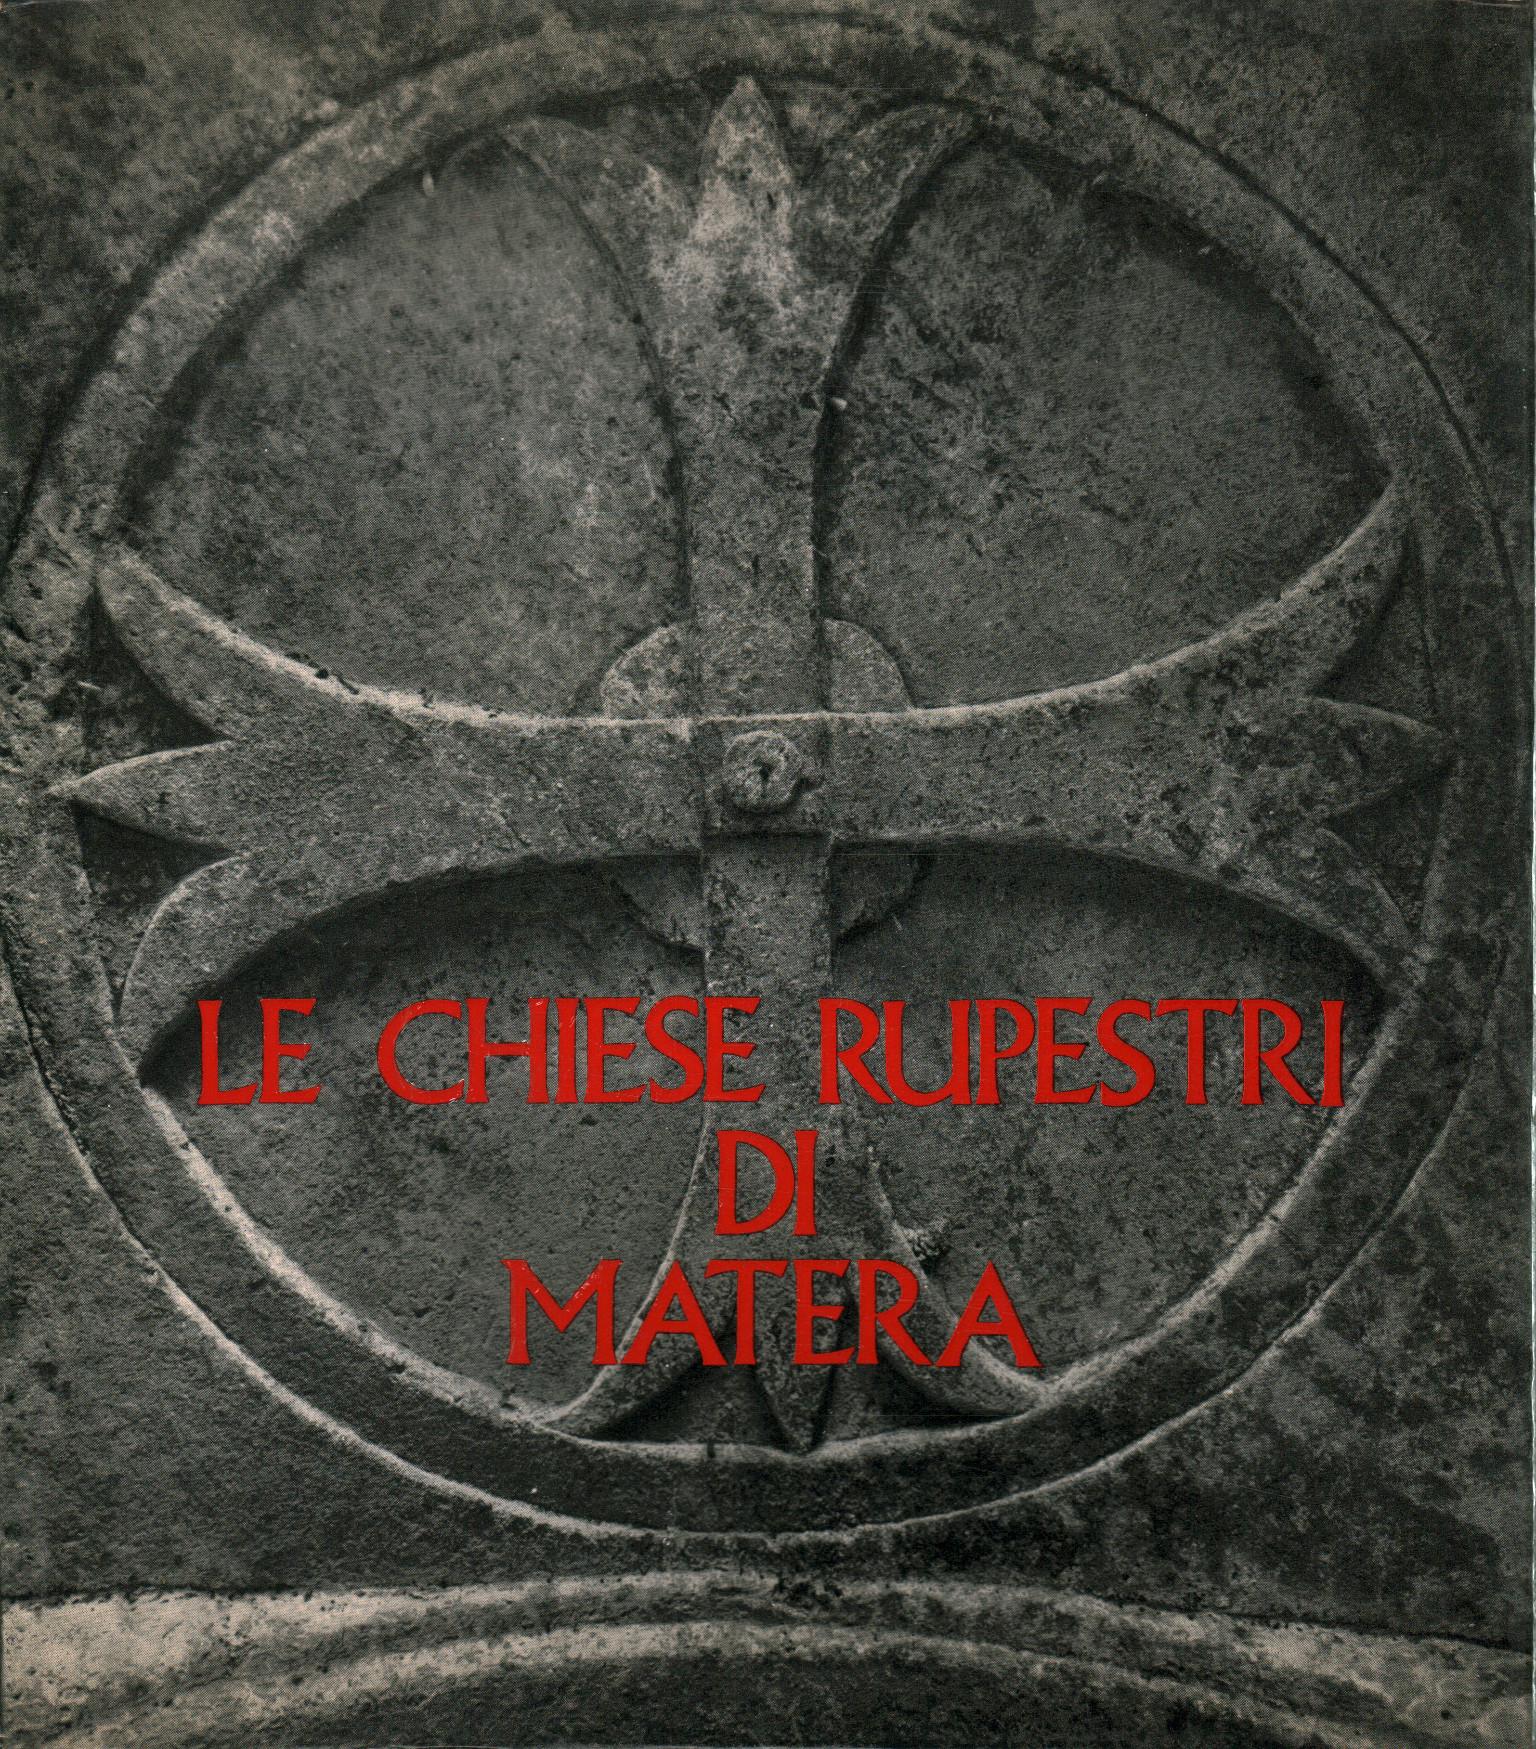 Las iglesias rupestres de Matera